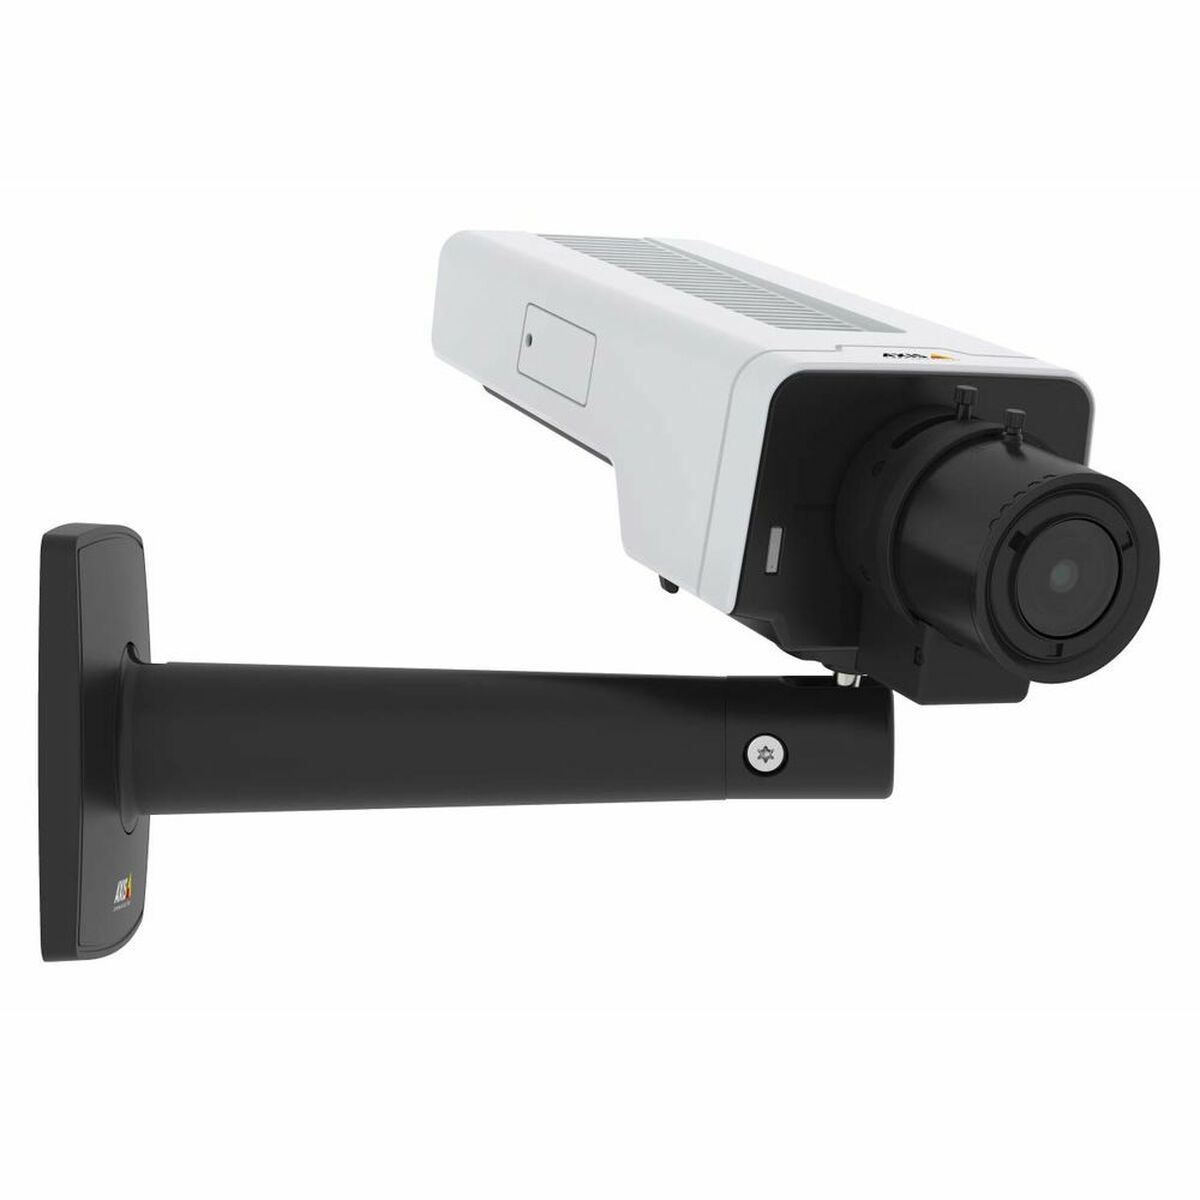 Surveillance Camcorder Axis 01532-001 1920 x 1080 px White-0